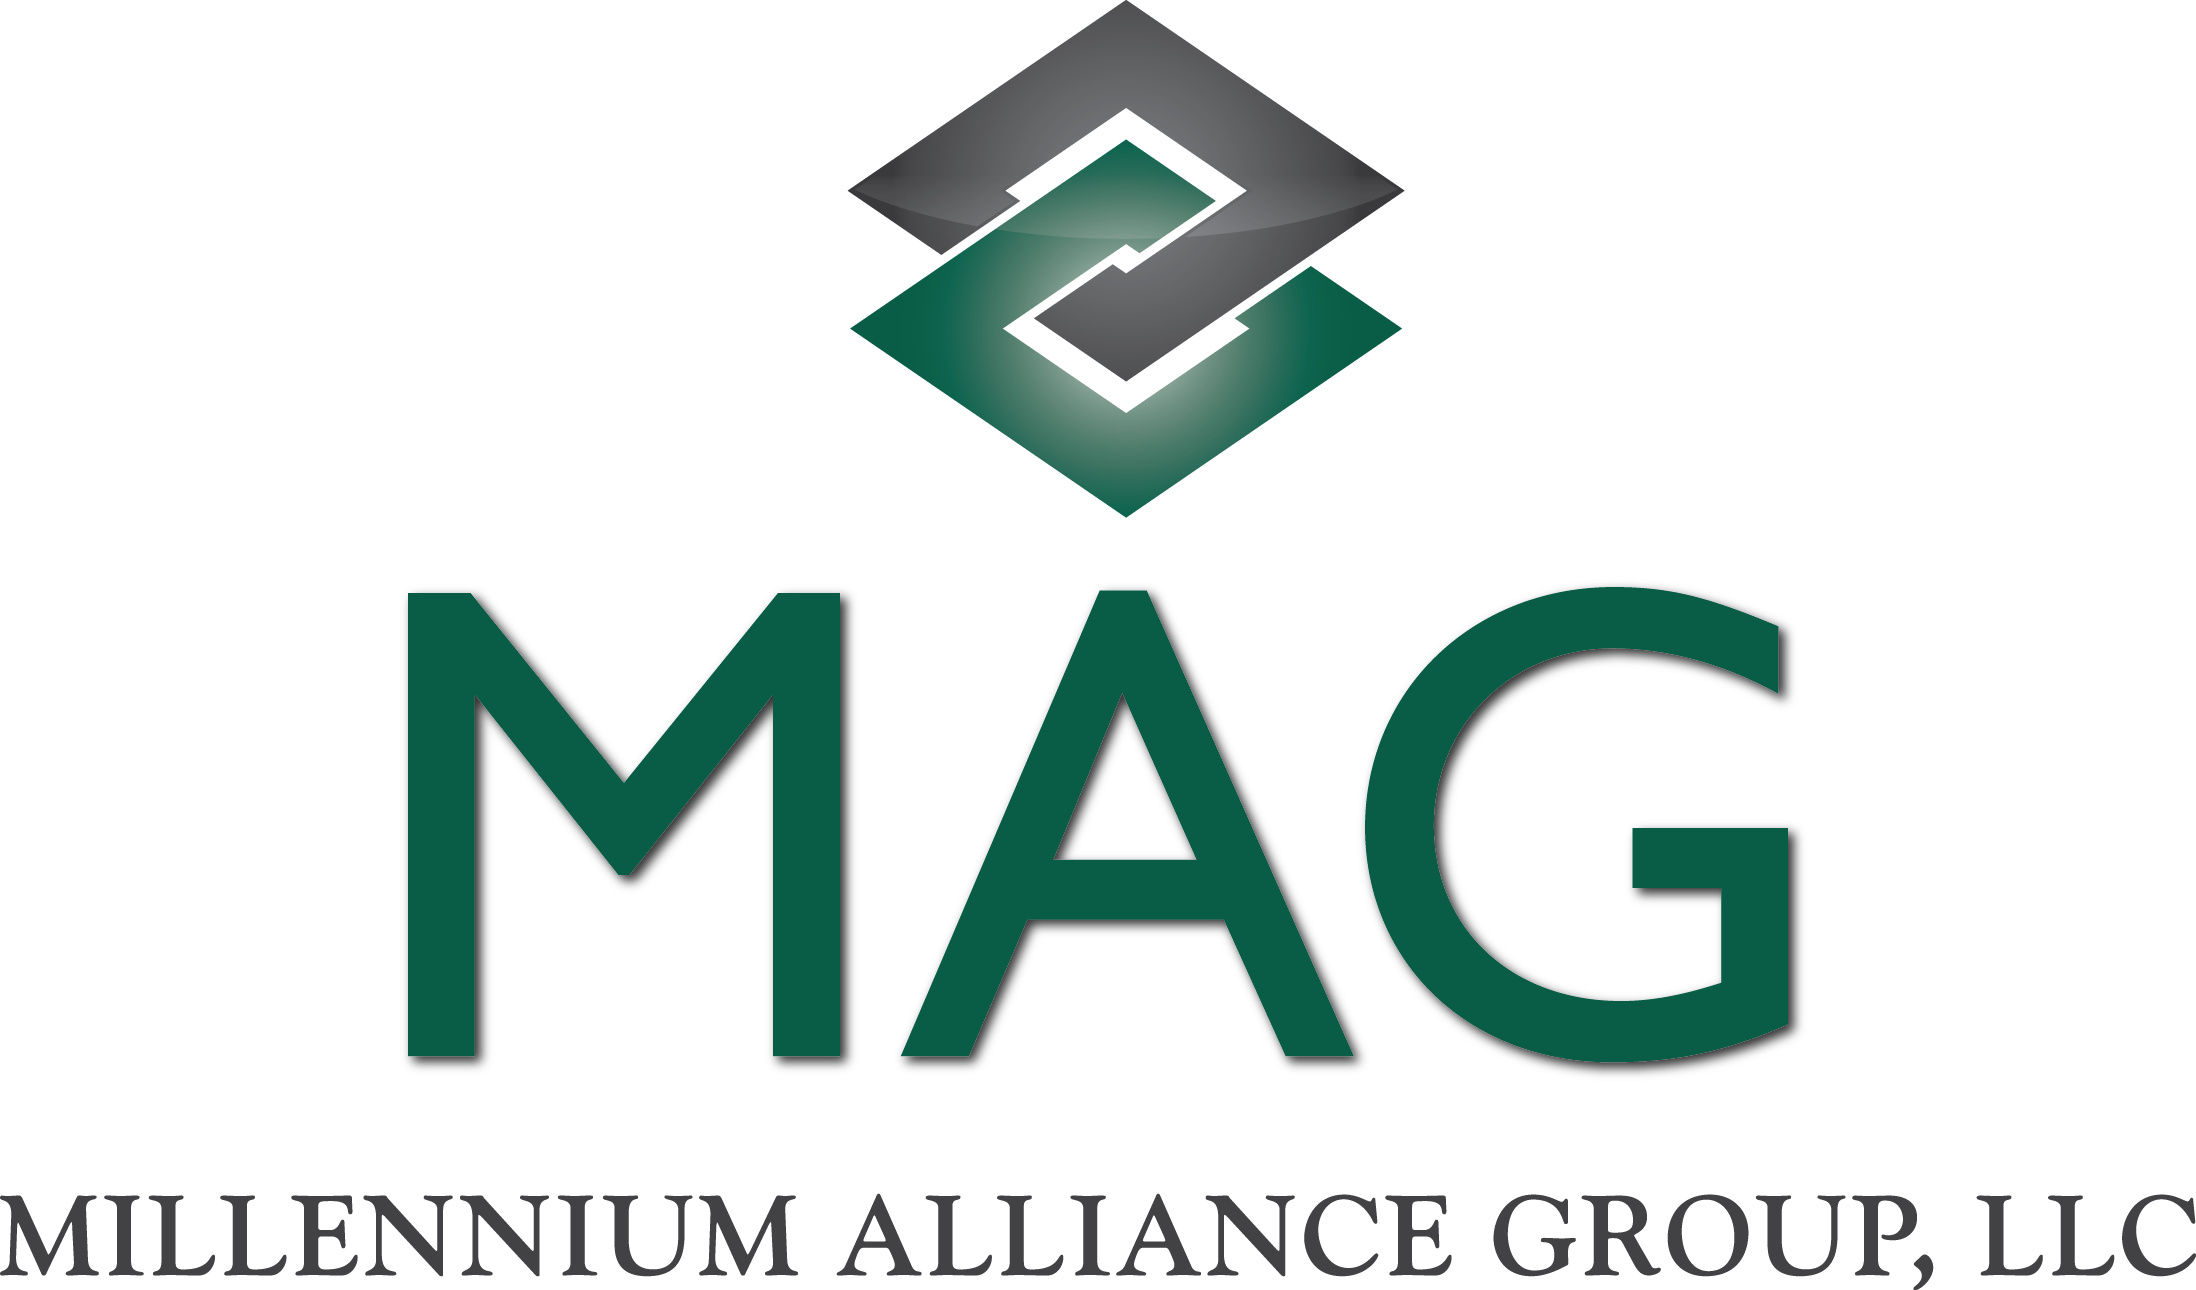 Millennium Alliance Group, LLC